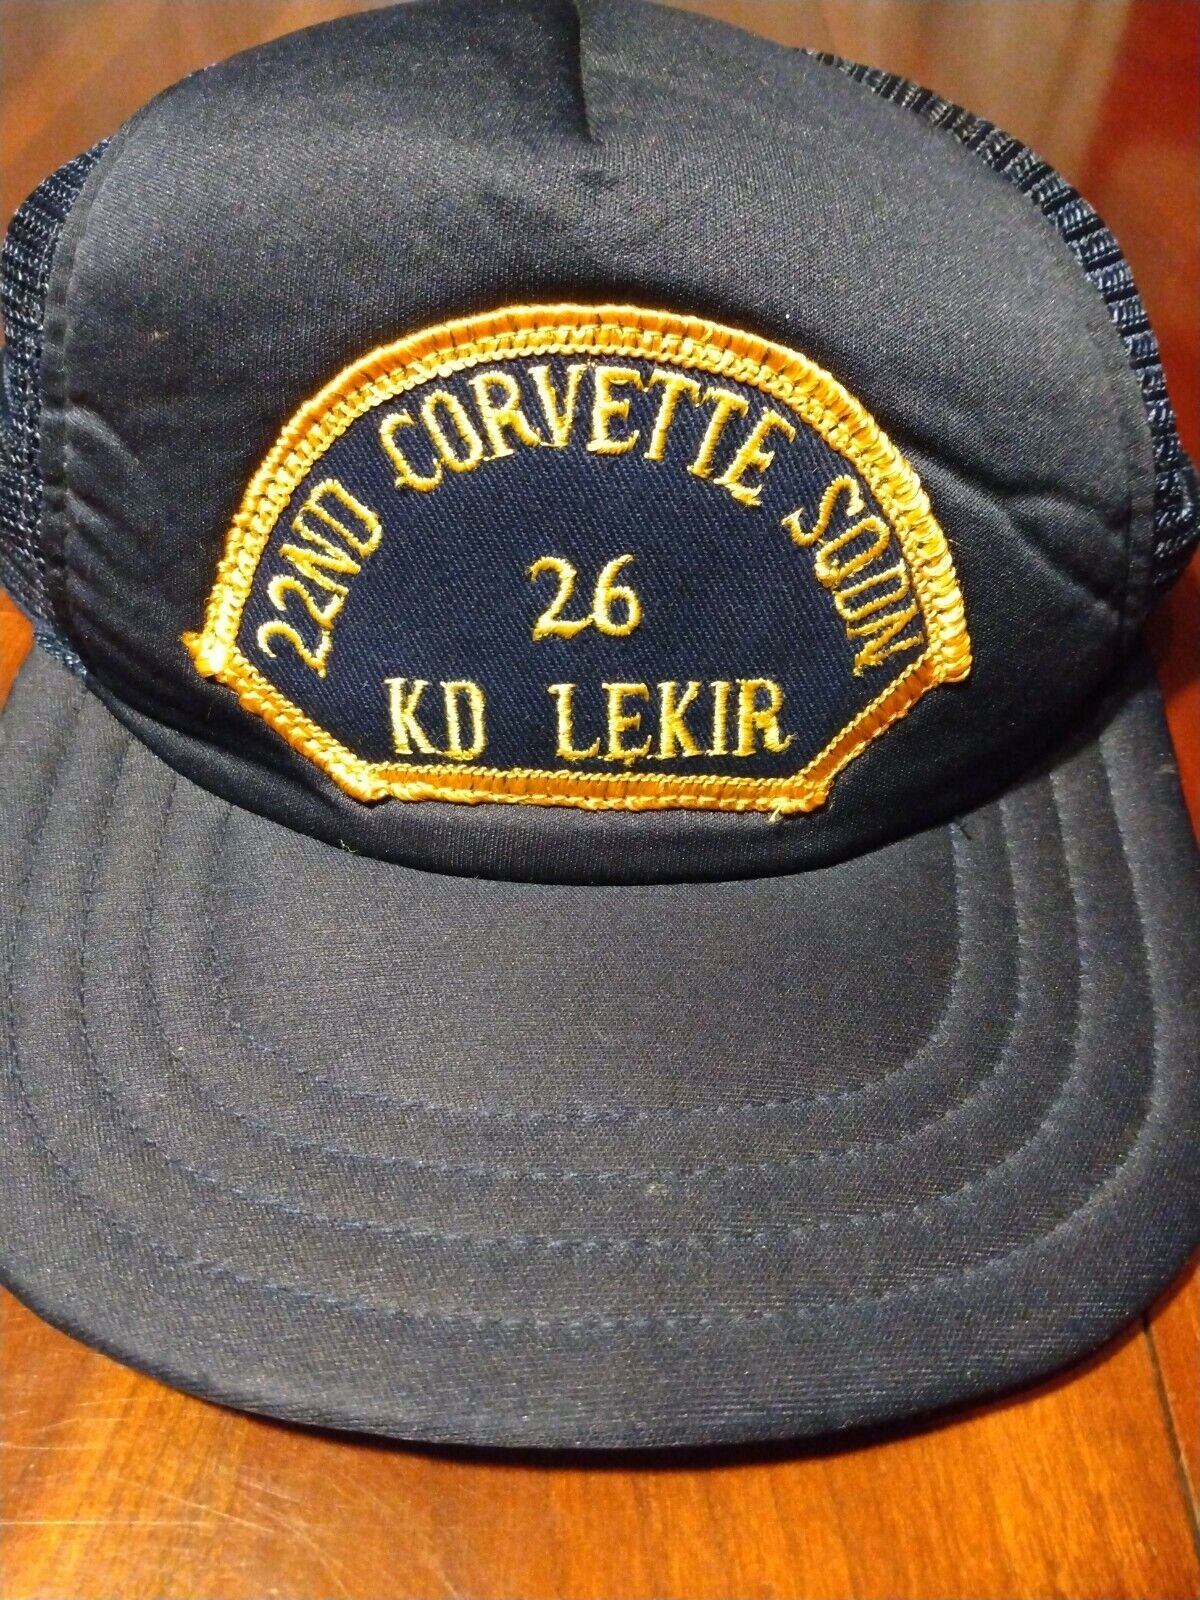 22nd Corvette Squadron 26 KD Lekir Hat Royal Malaysian Navy foreign trucker cap